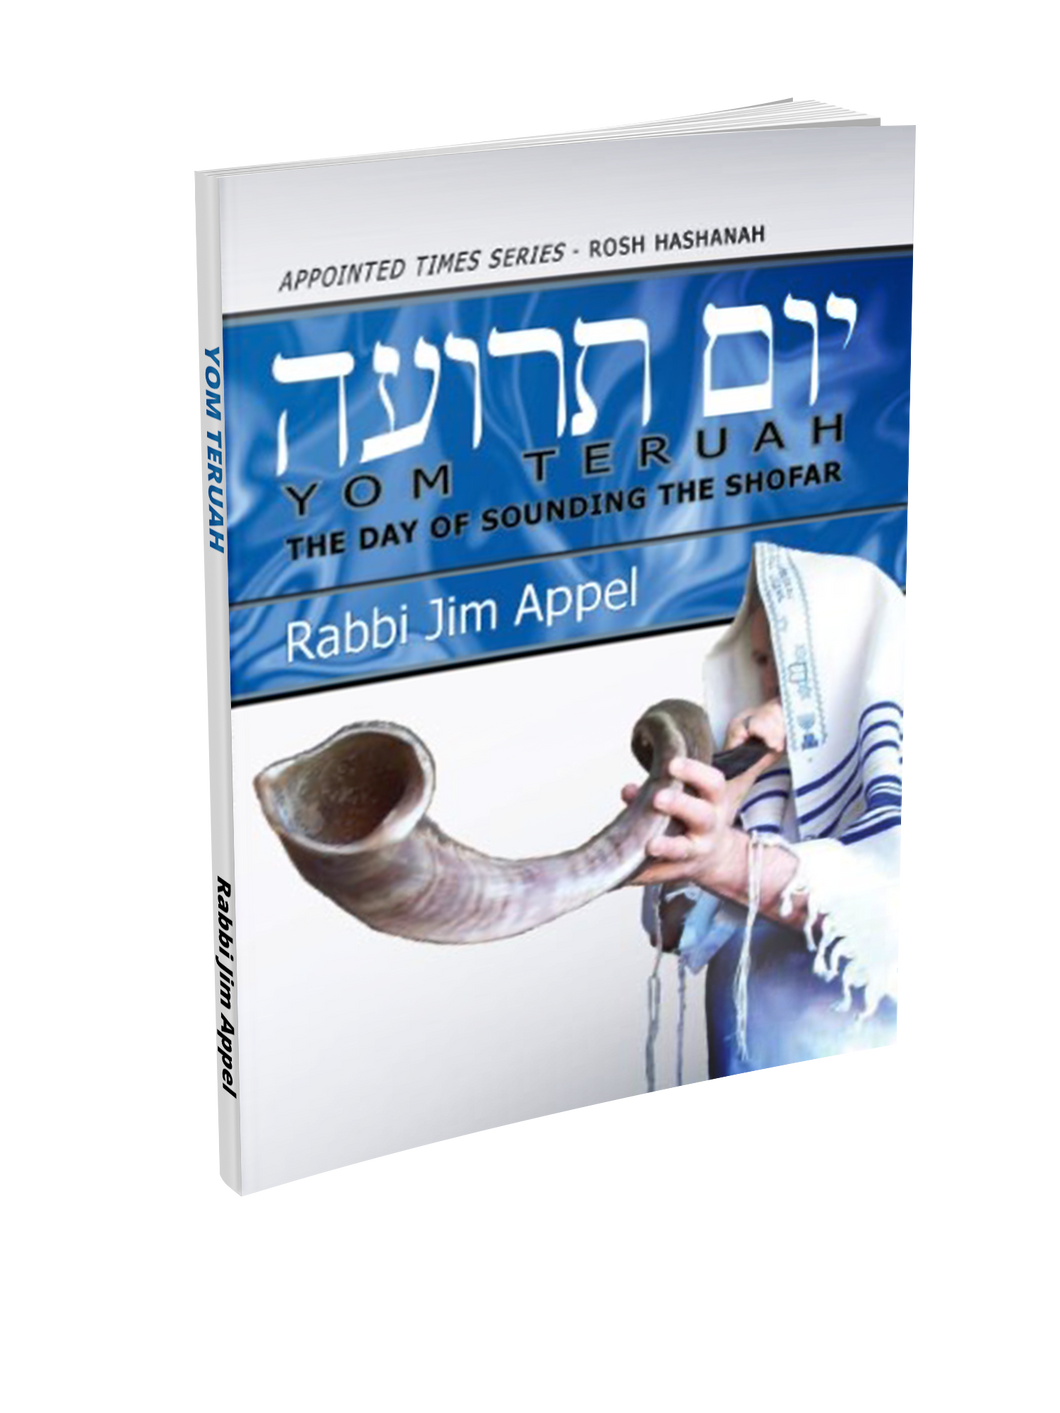 Yom Teruah  The Day of Sounding Shofar by Rabbi Jim Appel